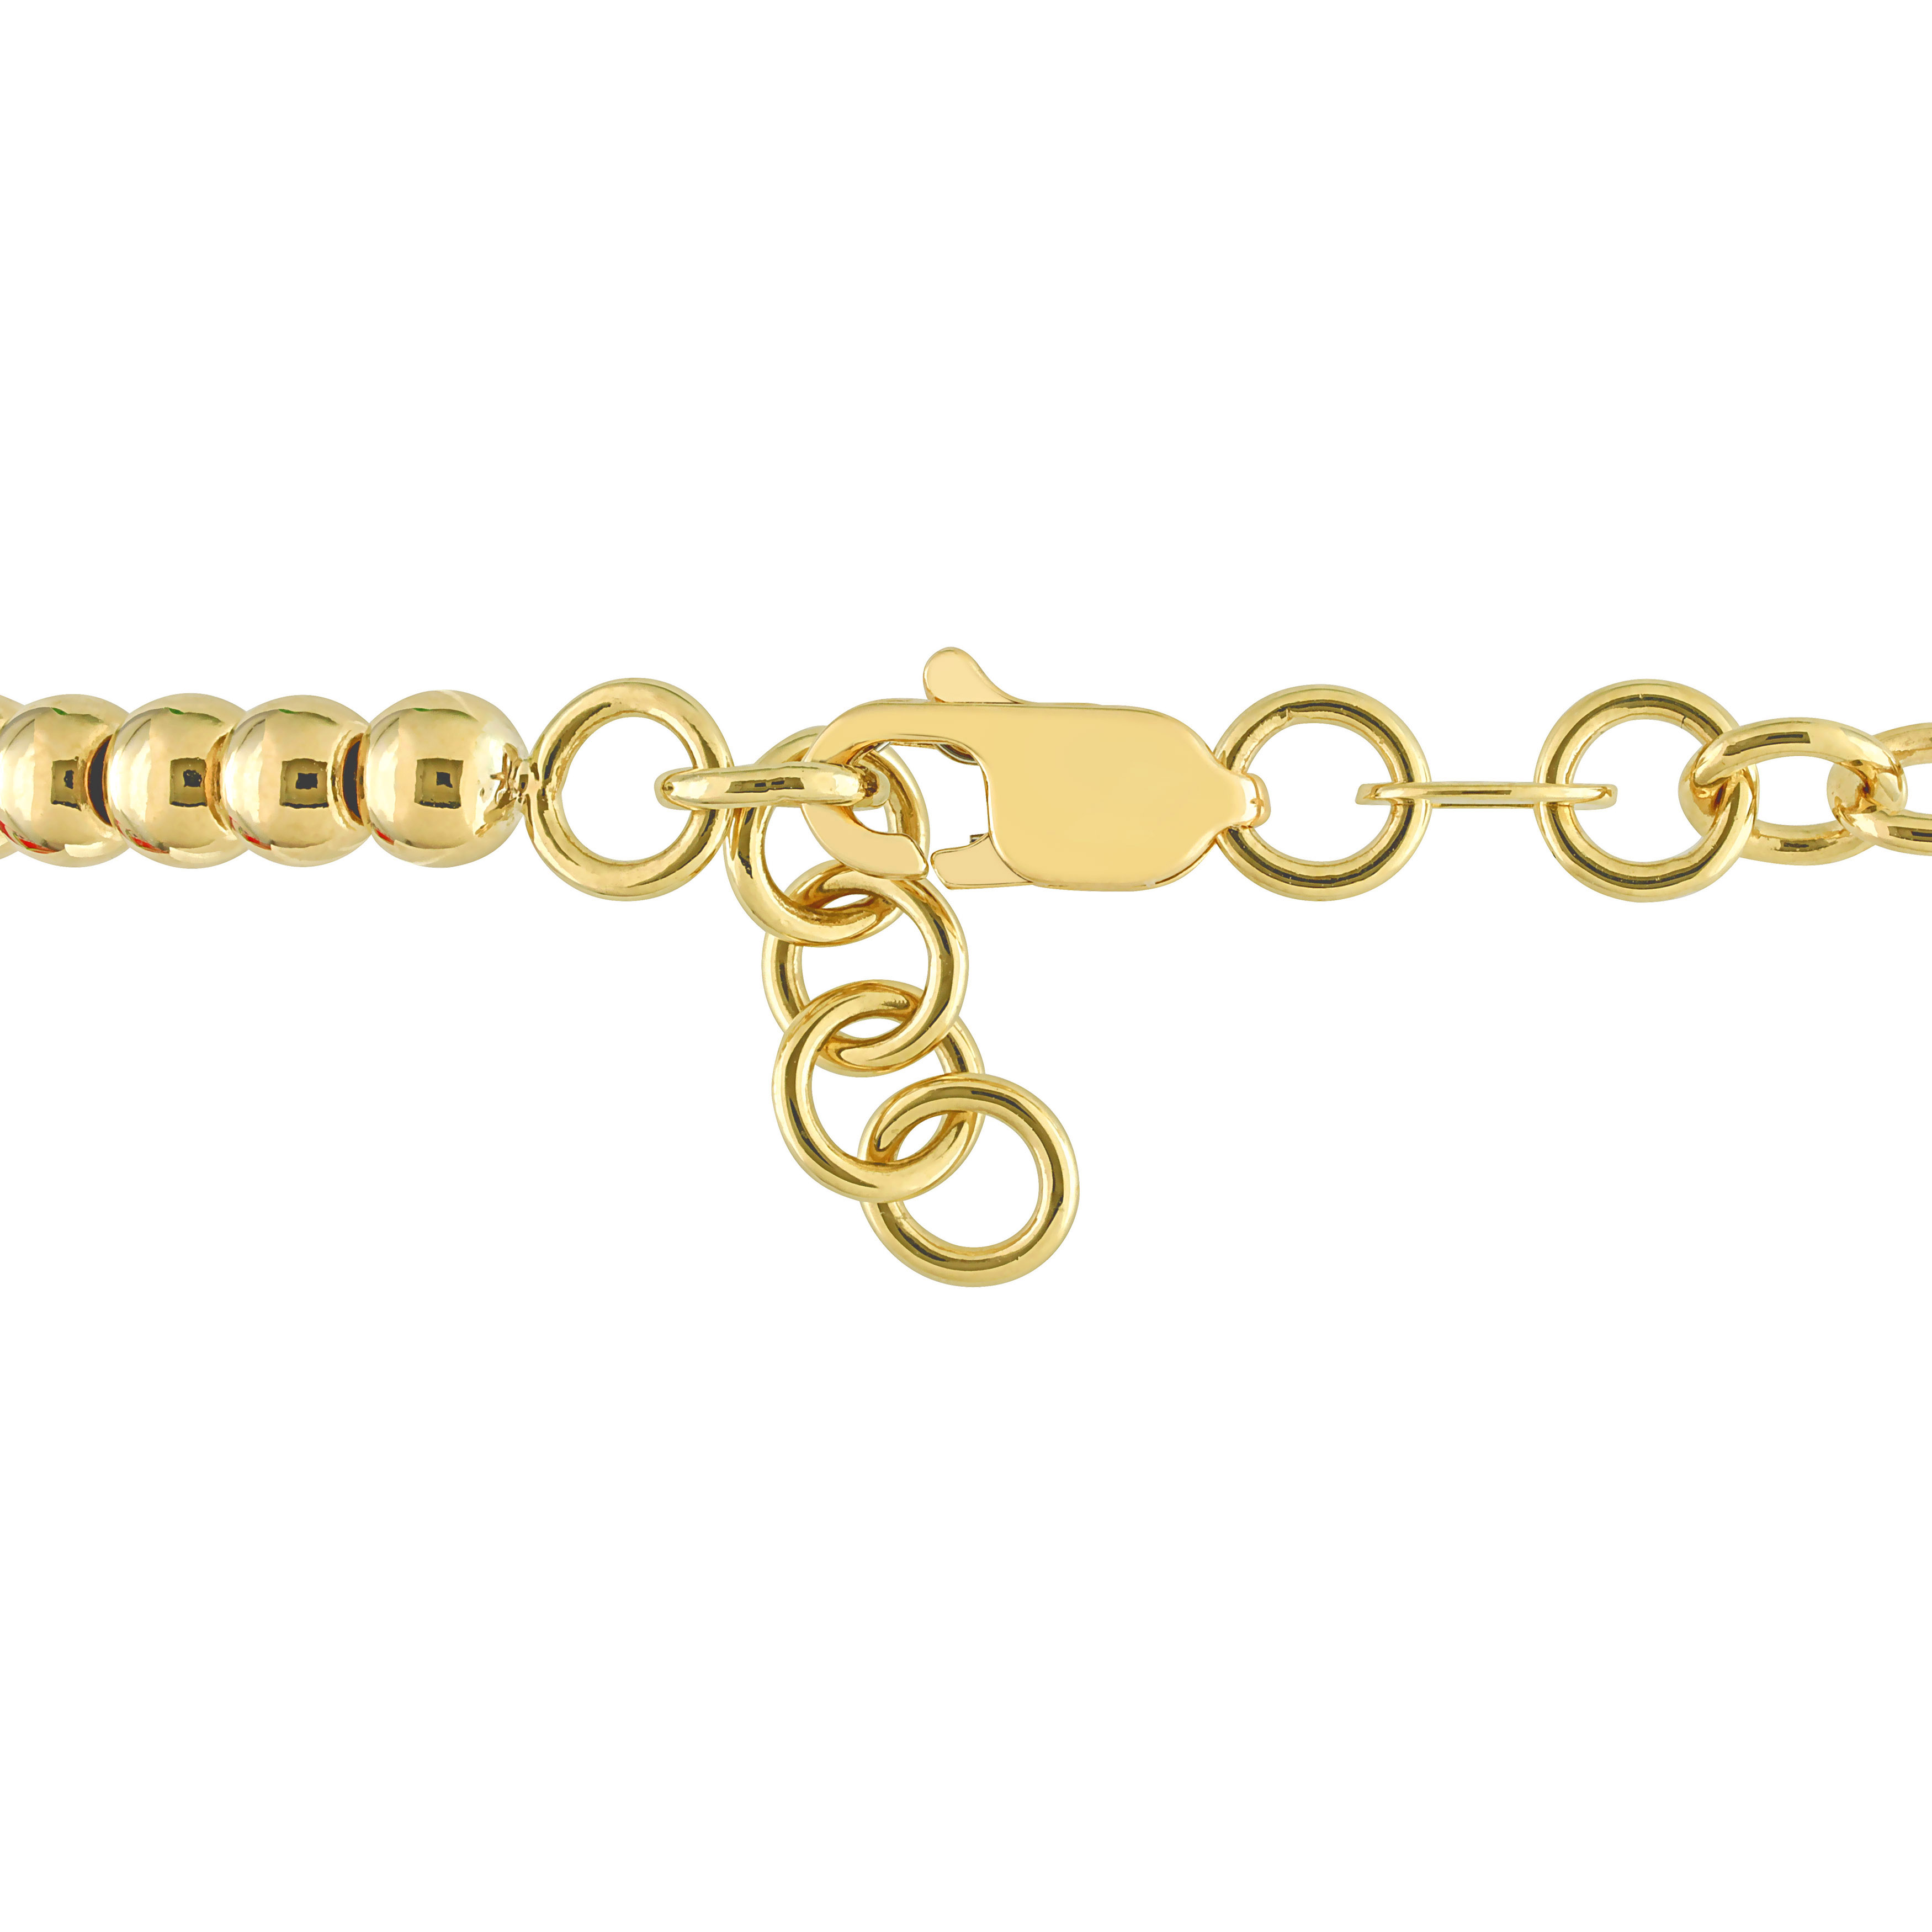 5/8 CT TDW Parallel Baguette-Cut Diamond Halo Bracelet in 14k Yellow Gold - 7-8 in.